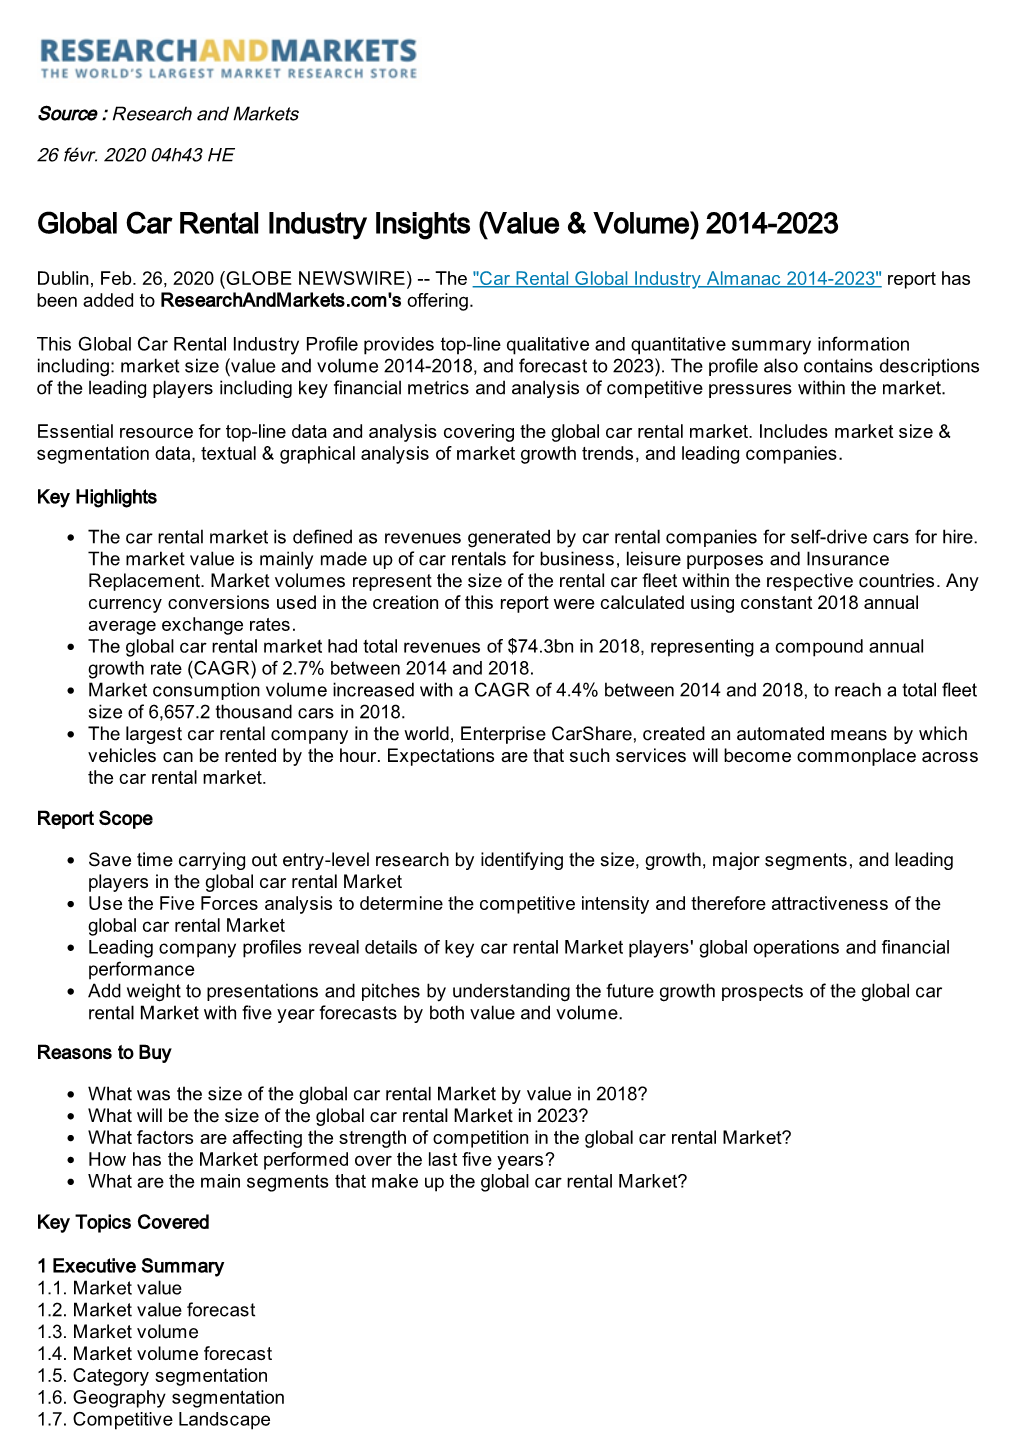 Global Car Rental Industry Insights (Value & Volume) 2014-2023